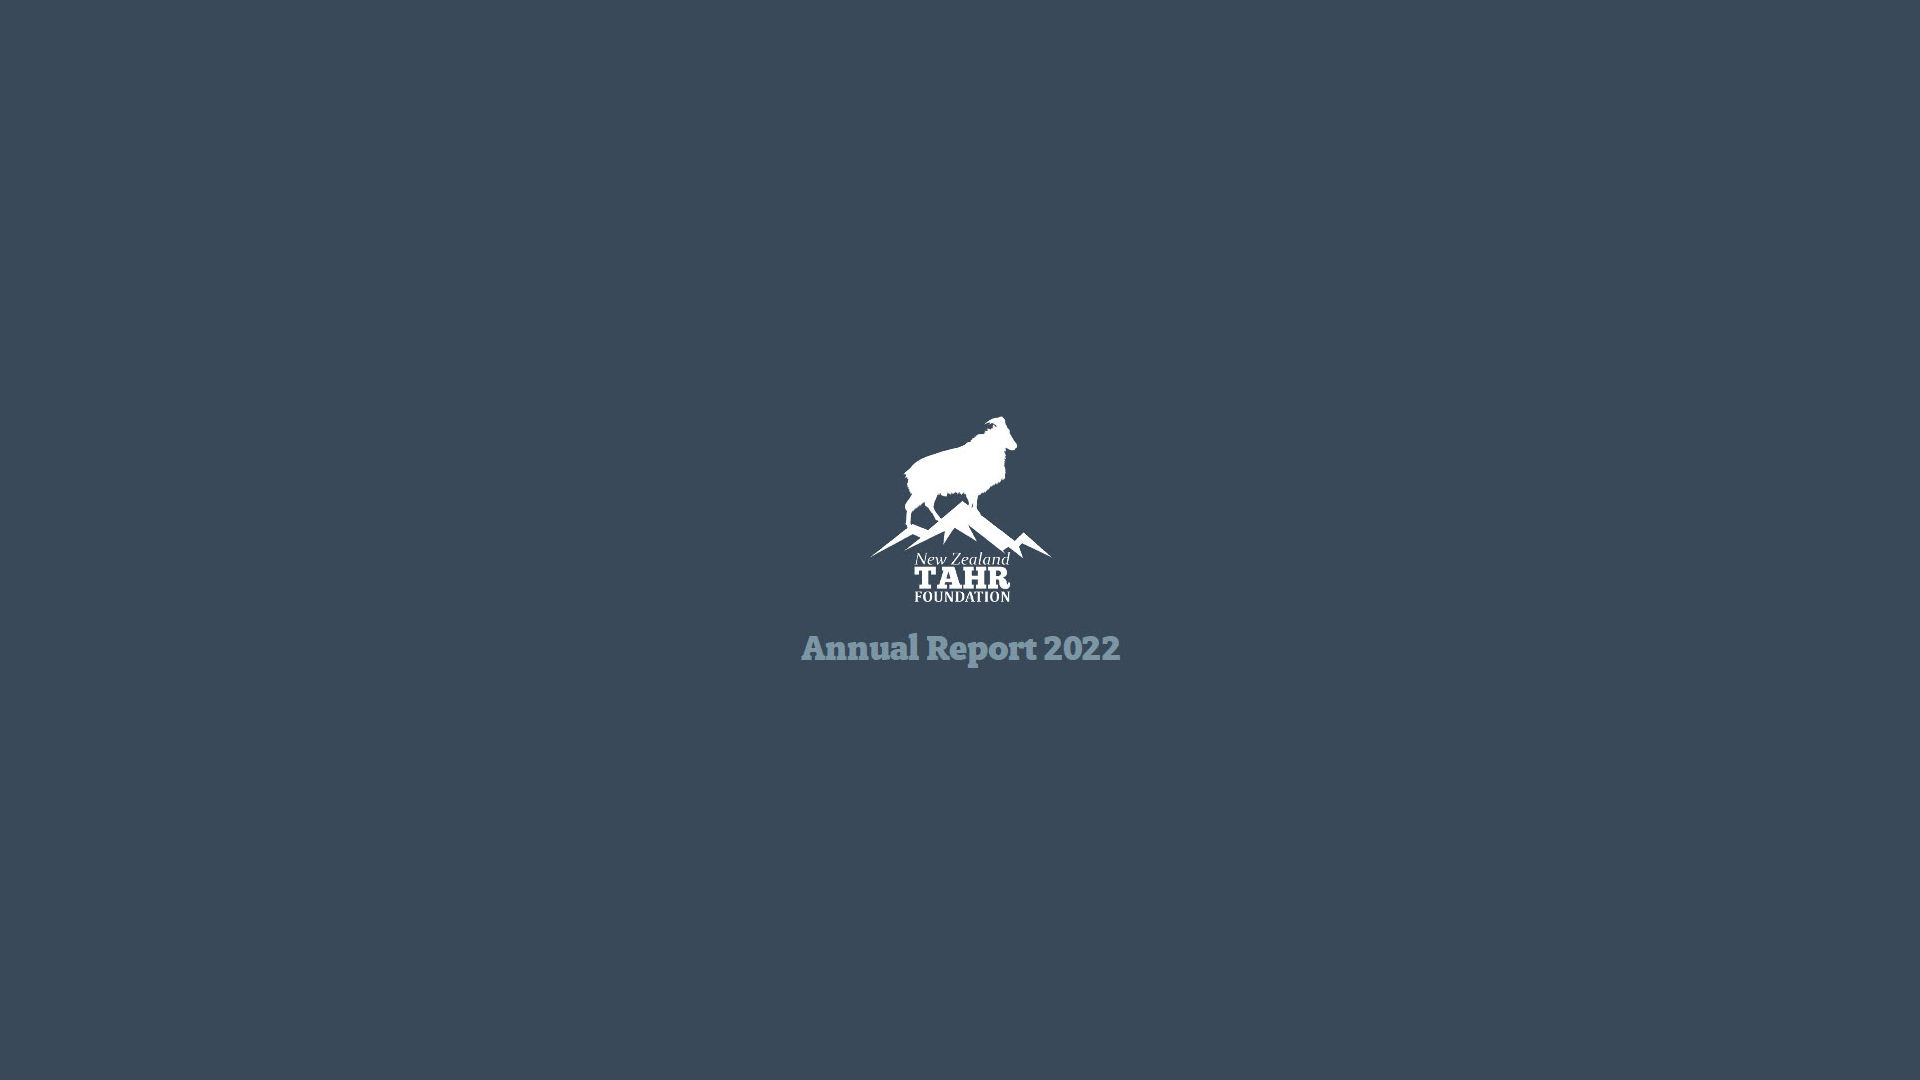 Tahr Foundation Annual Report 2022